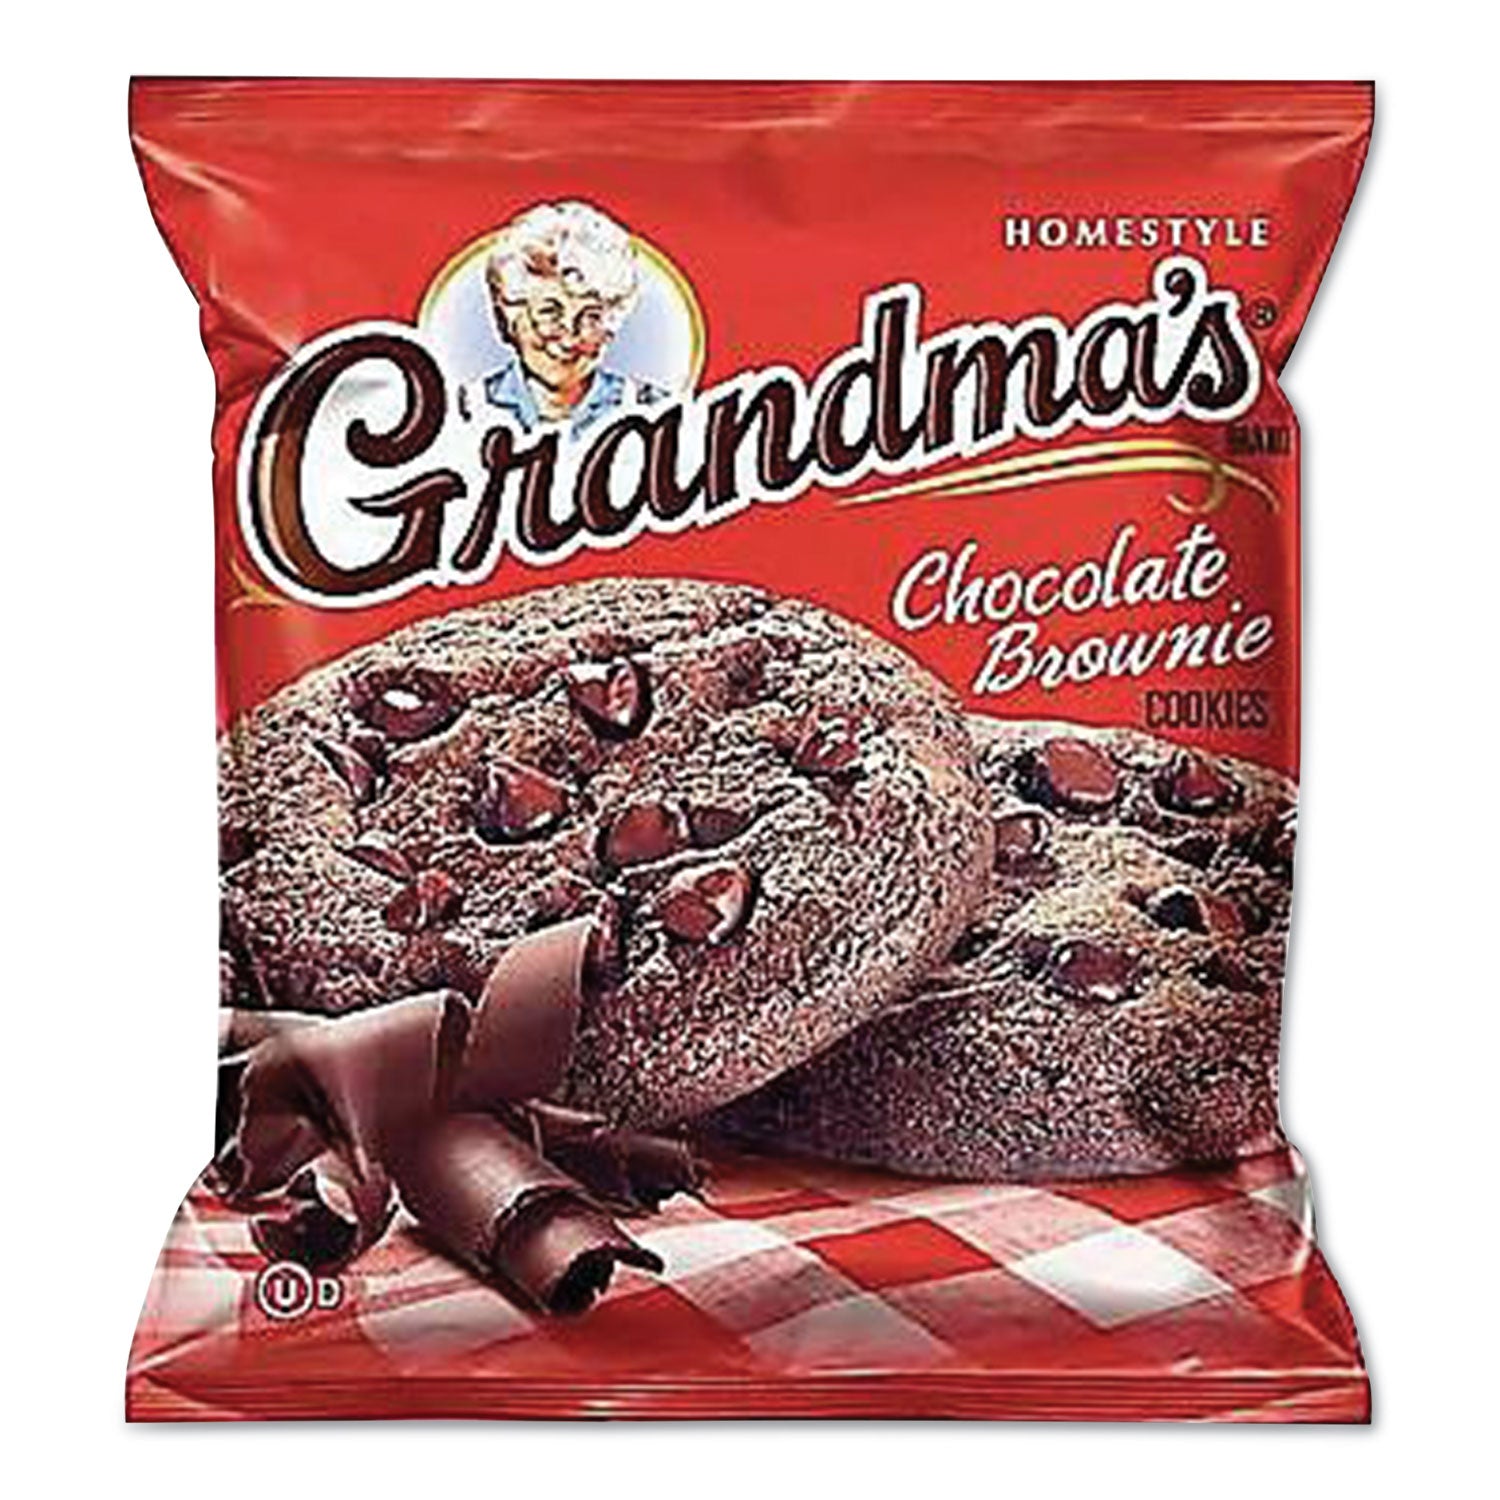 cookies--single-serve-chocolate-brownie-25-oz-packet-60-carton_grmfri10310 - 1